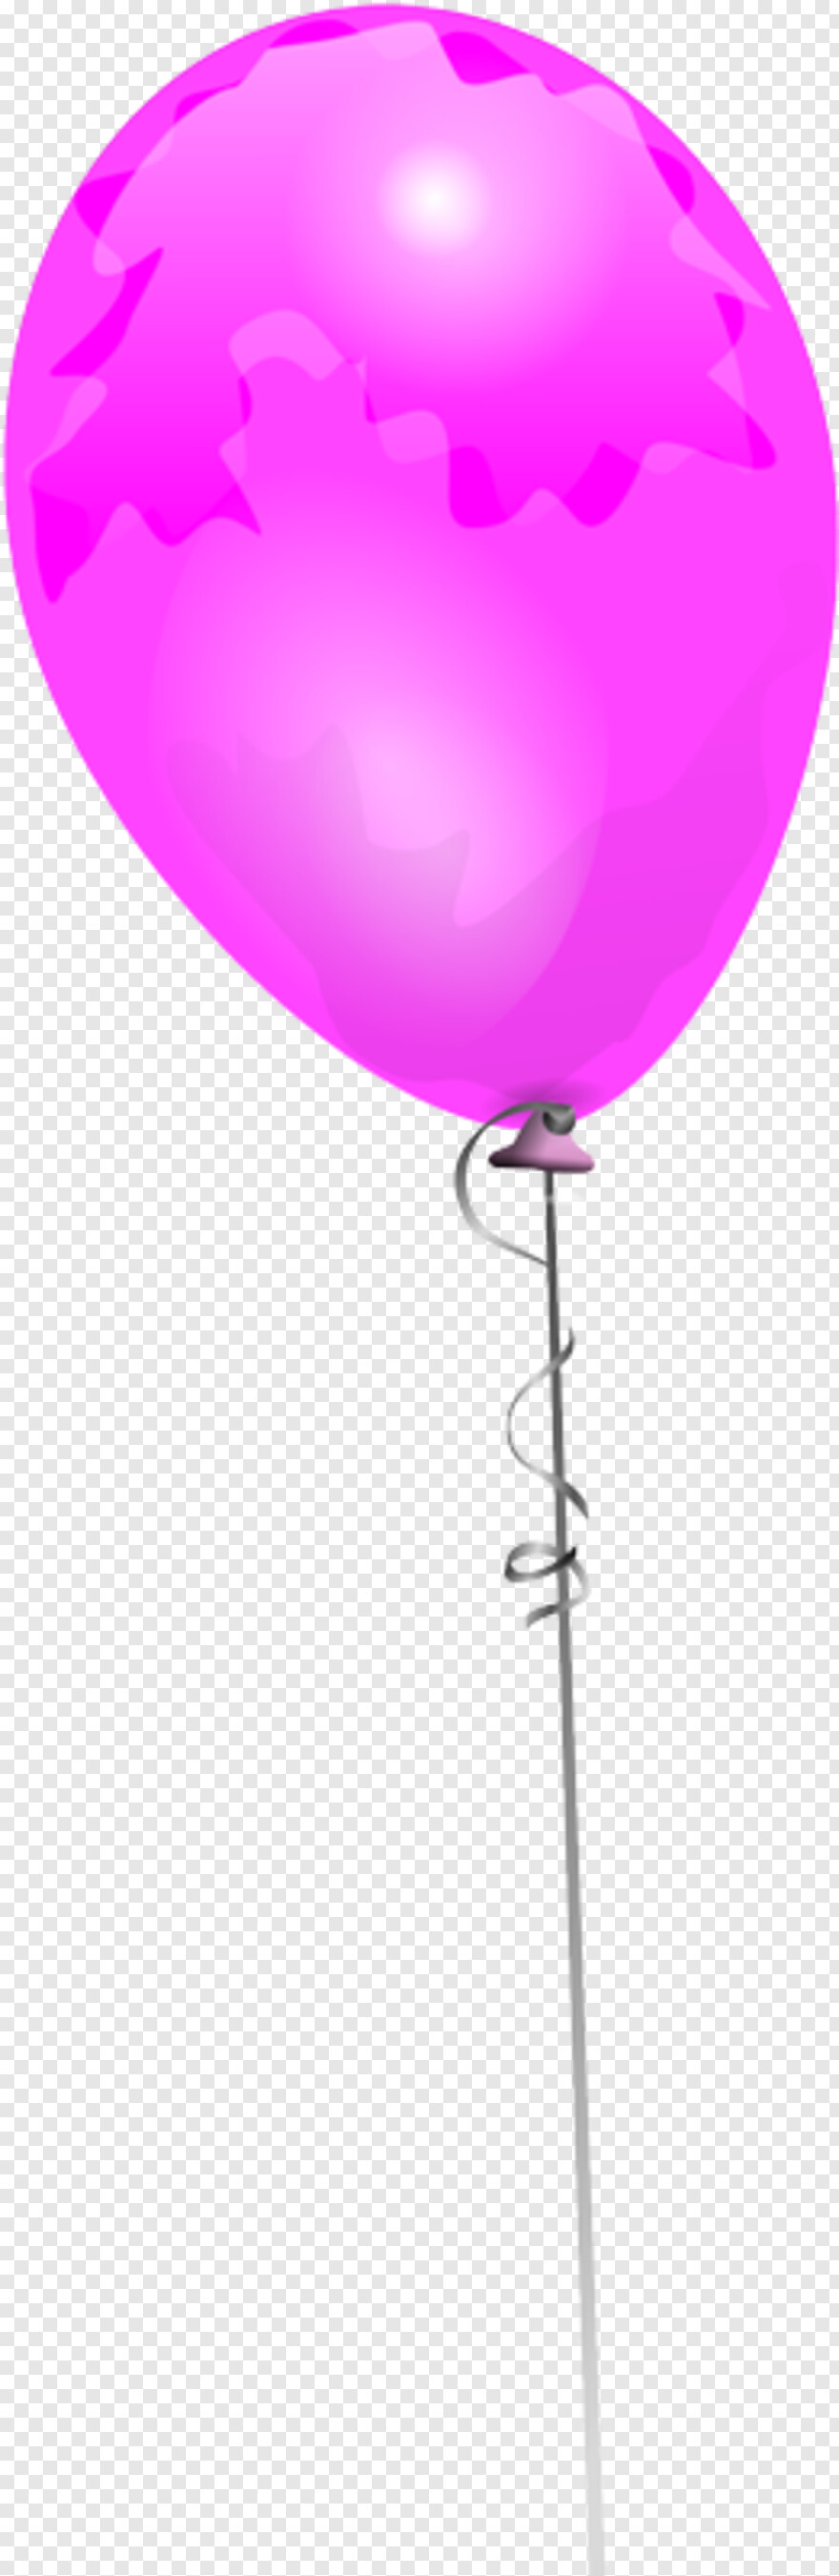 remax-balloon # 414593